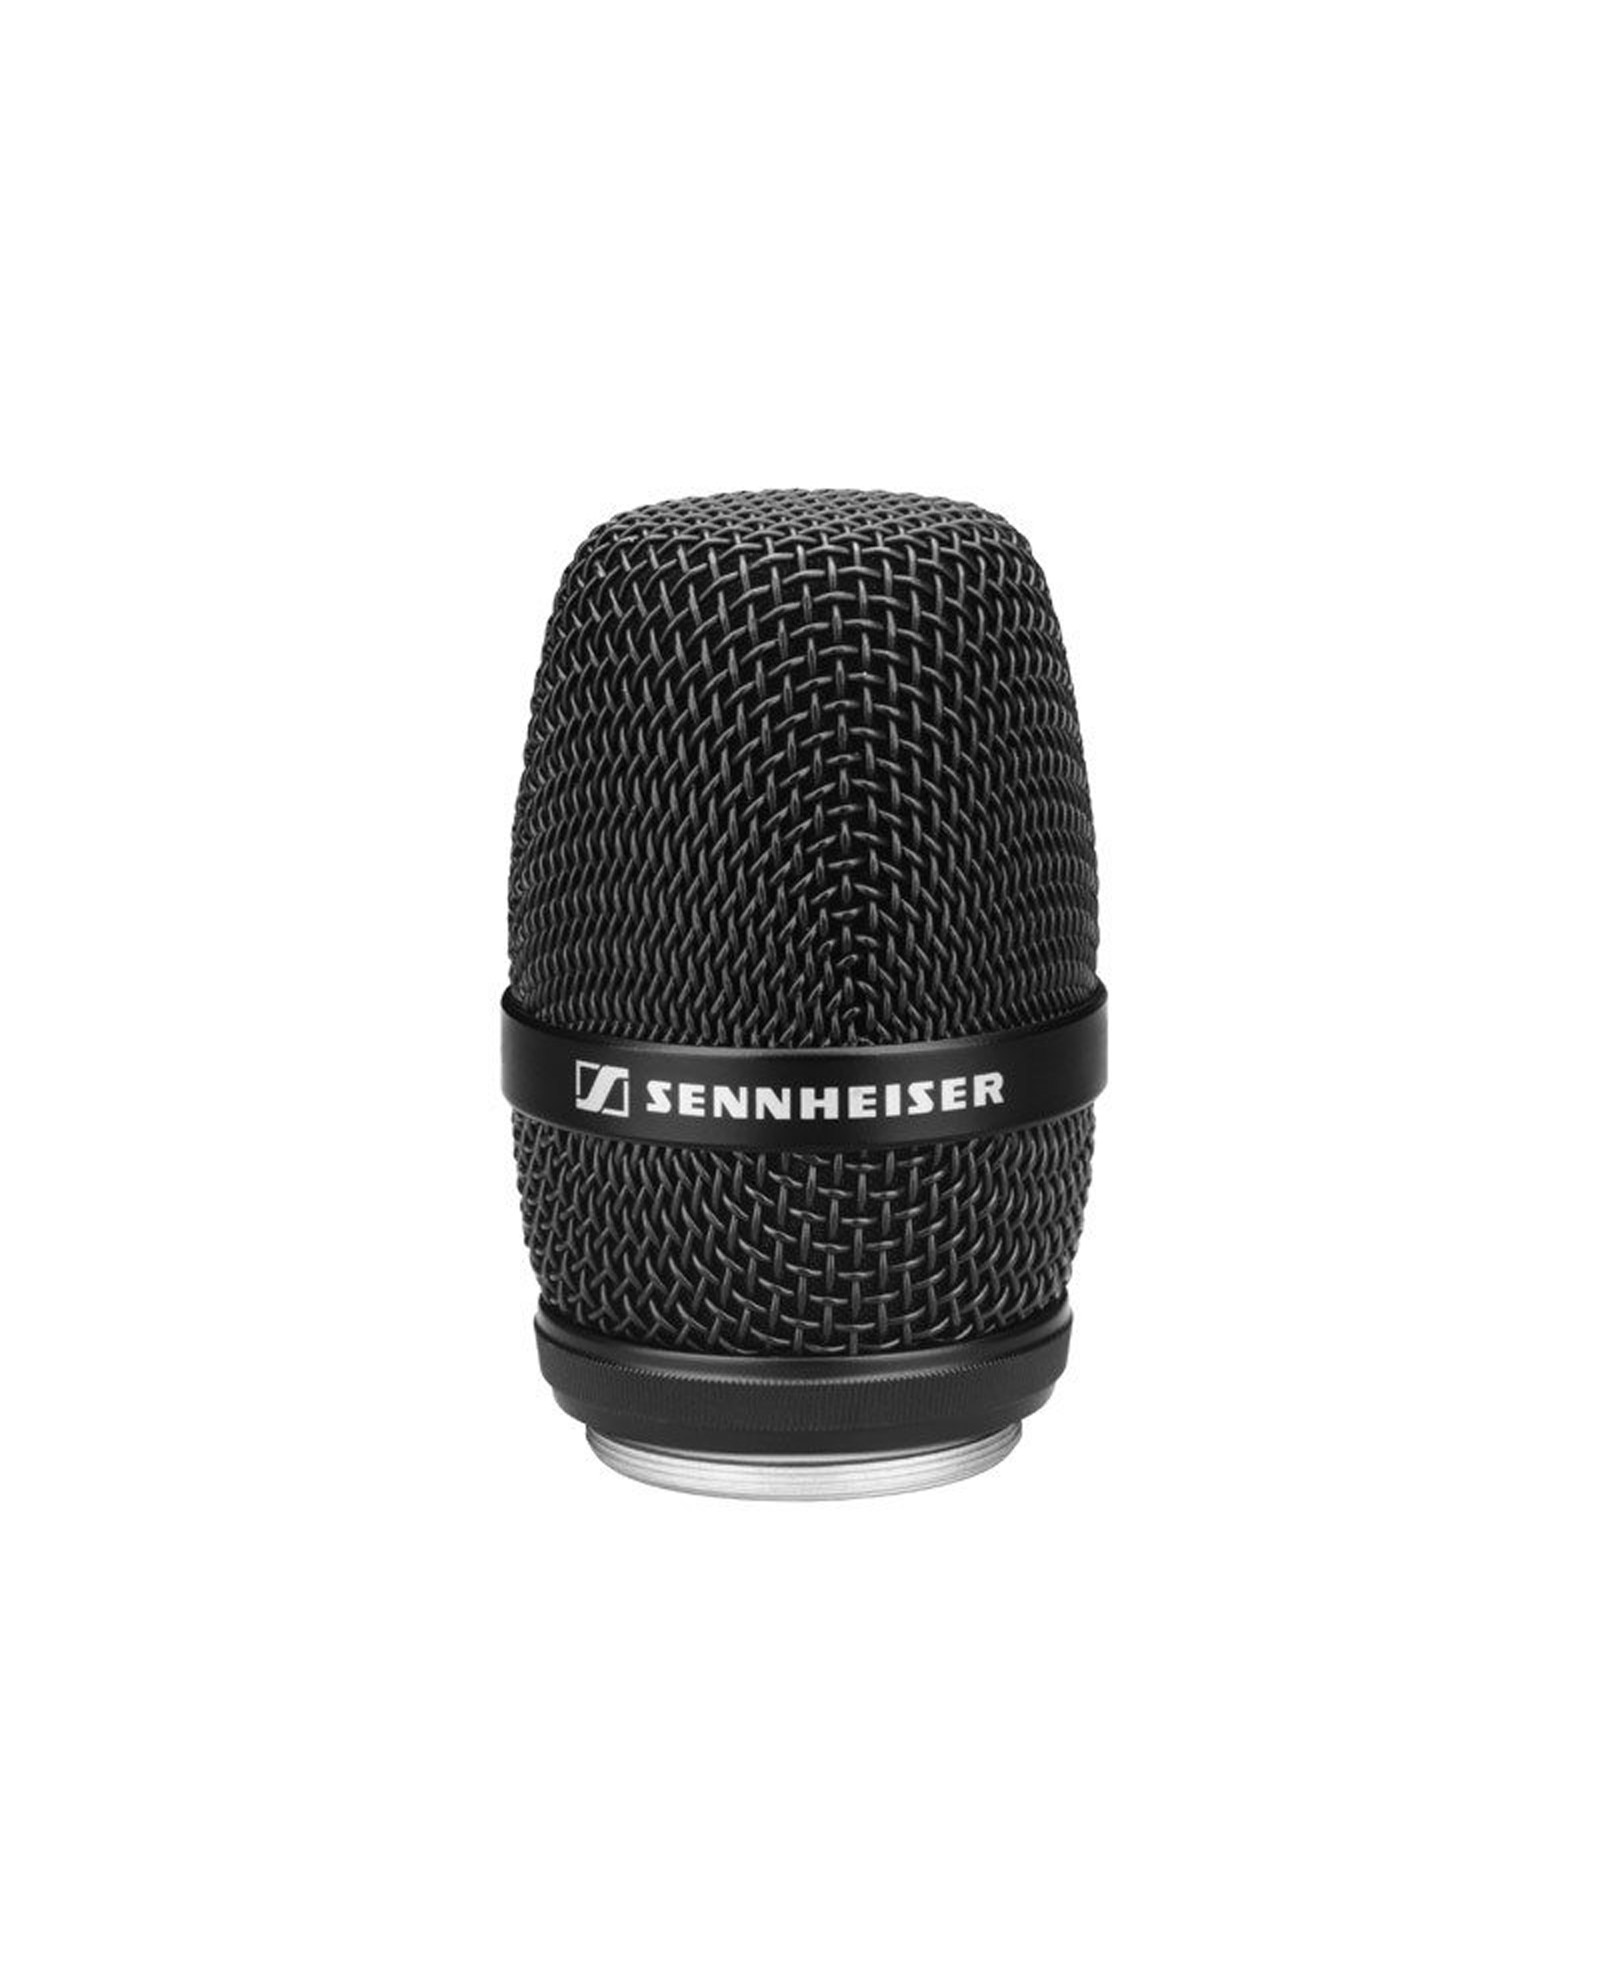 Sennheiser Mmk 965 Bk Flagship True Condenser Microphone Capsule